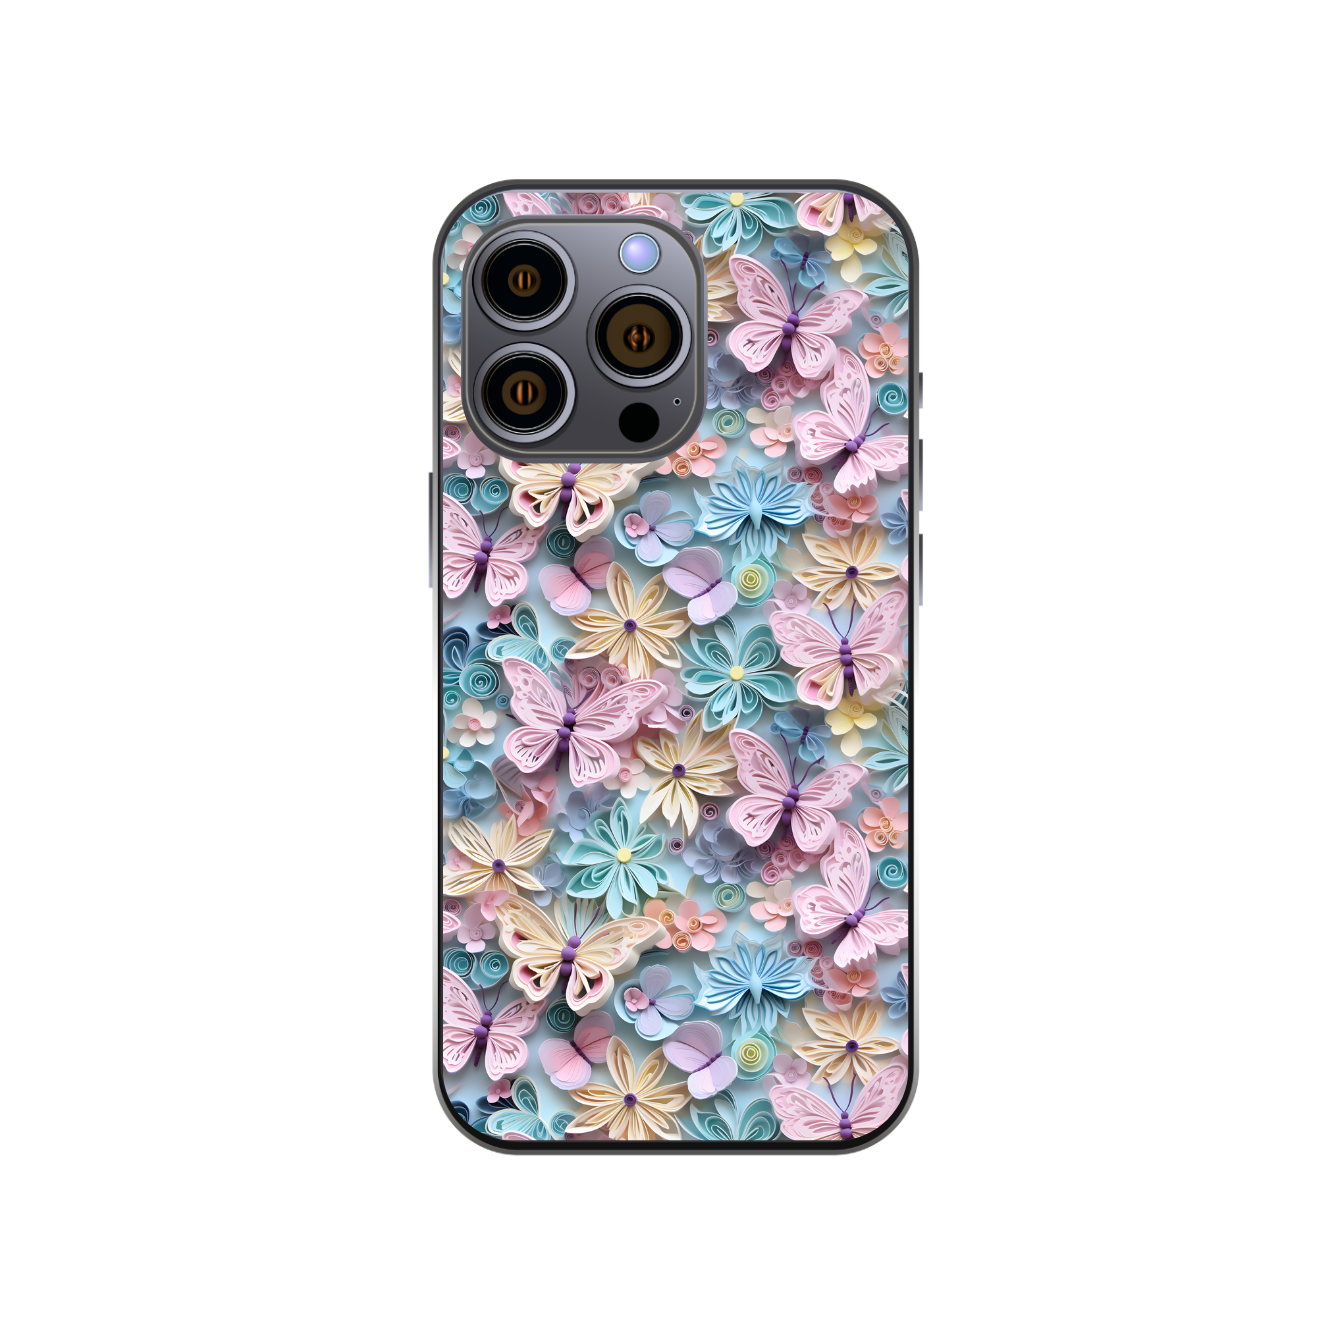 3D Butterflies and Flowers Phone Case